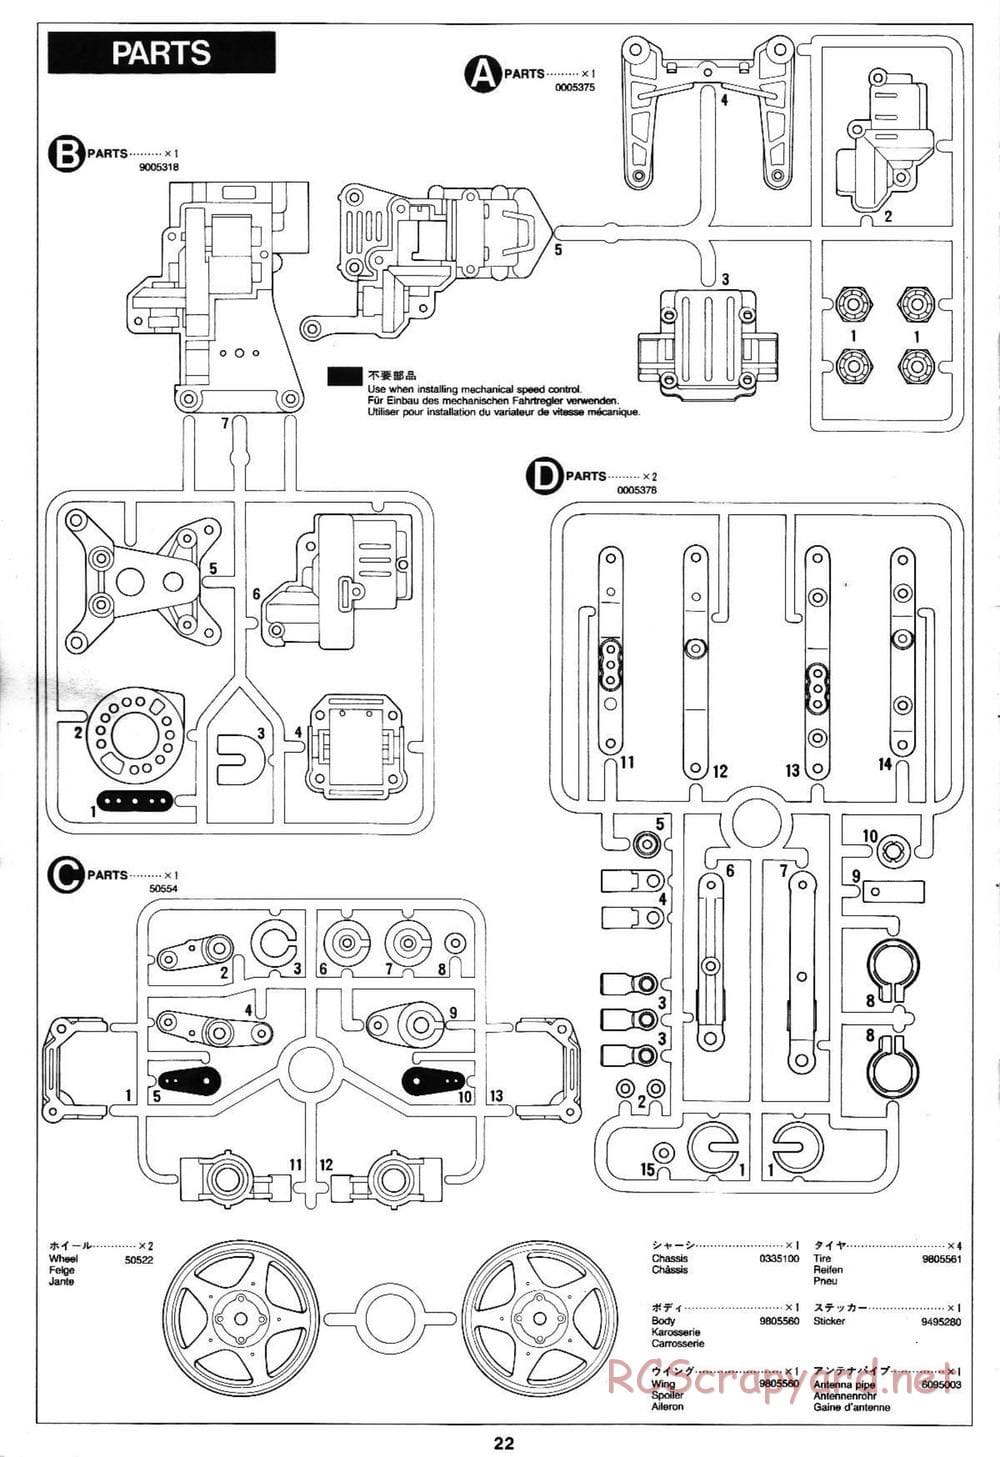 Tamiya - Blazing Star Chassis - Manual - Page 22